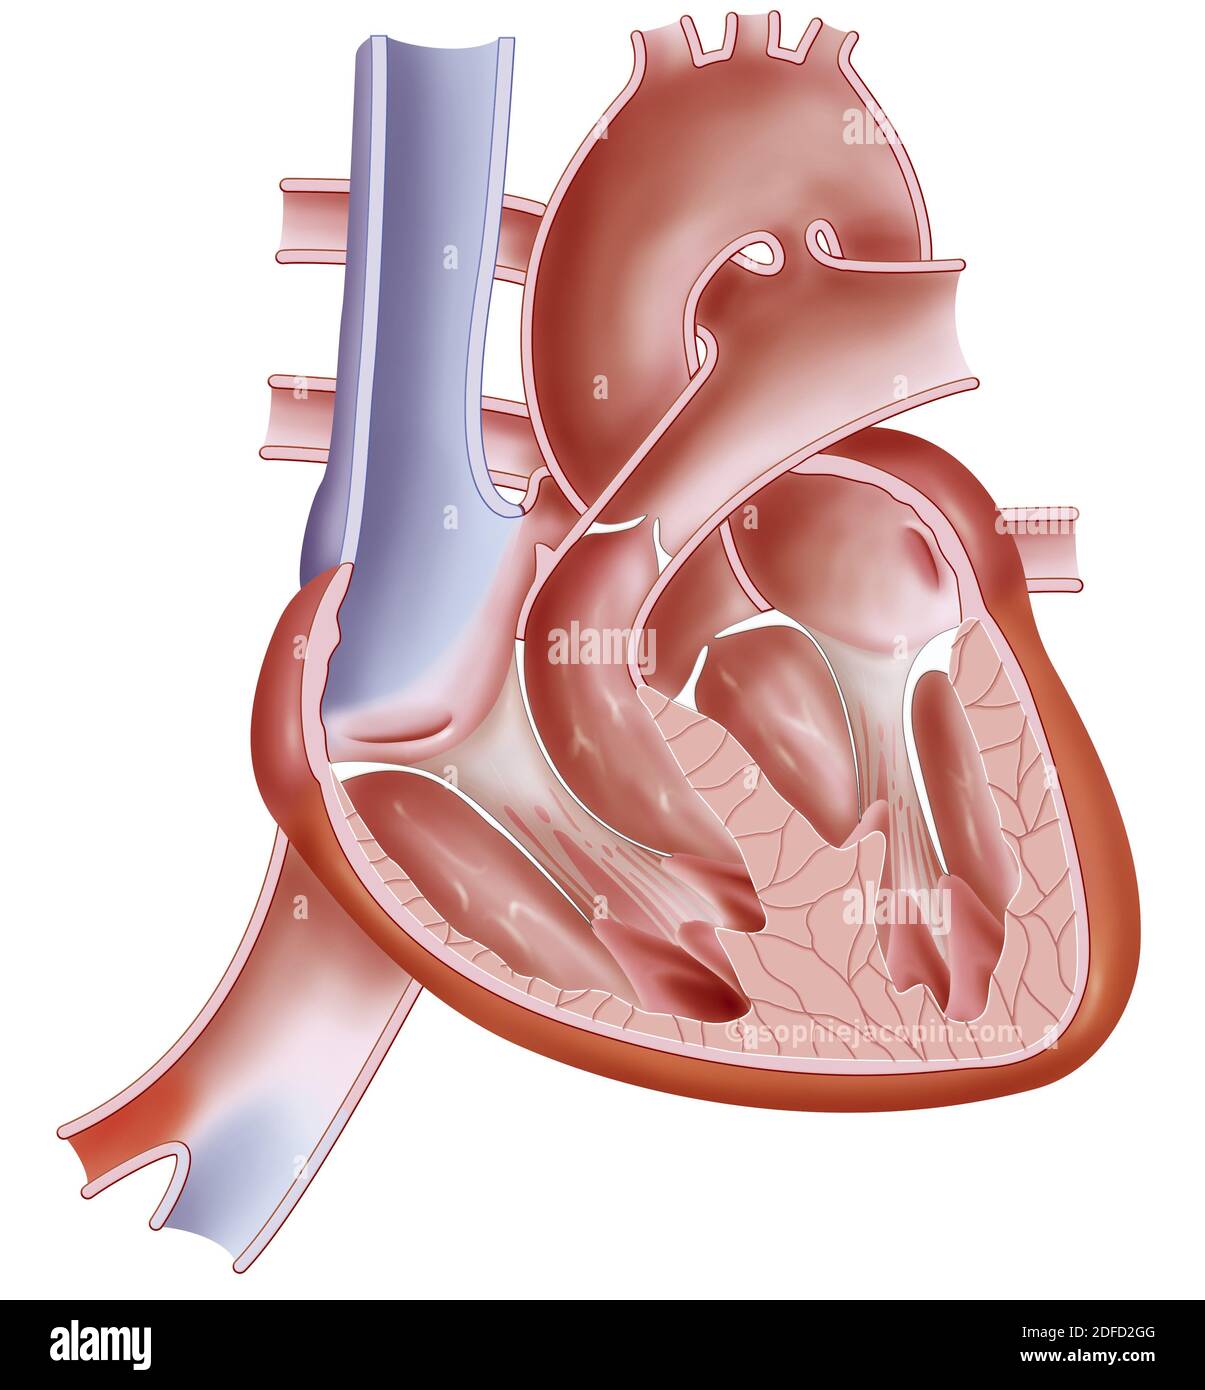 Anatomy of the fetus heart Stock Photo